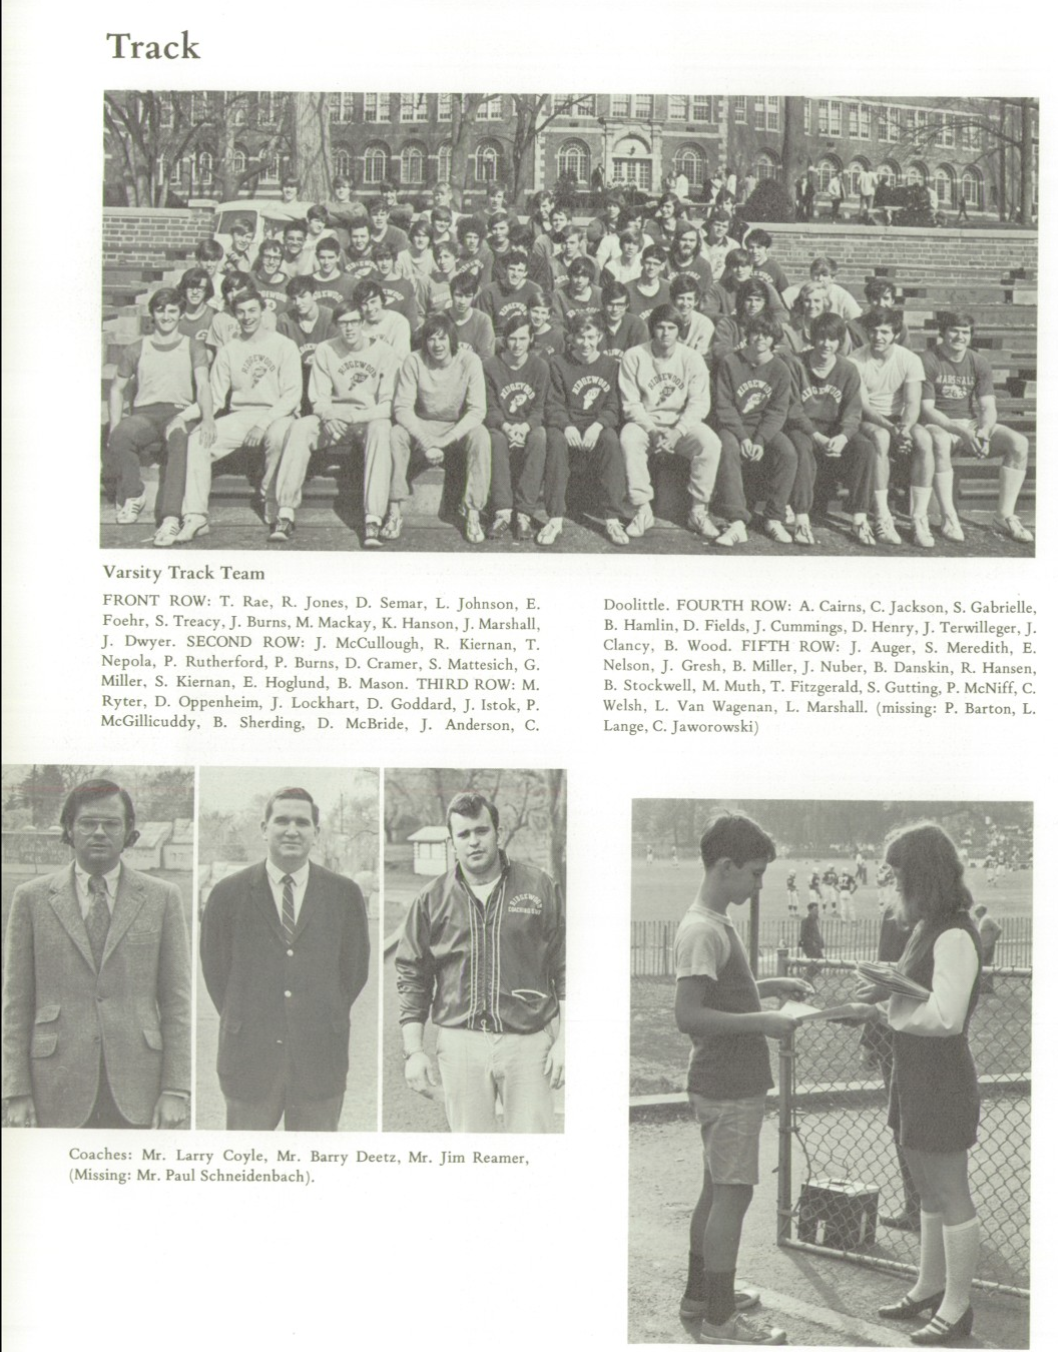 1971 Boys’ Track Team